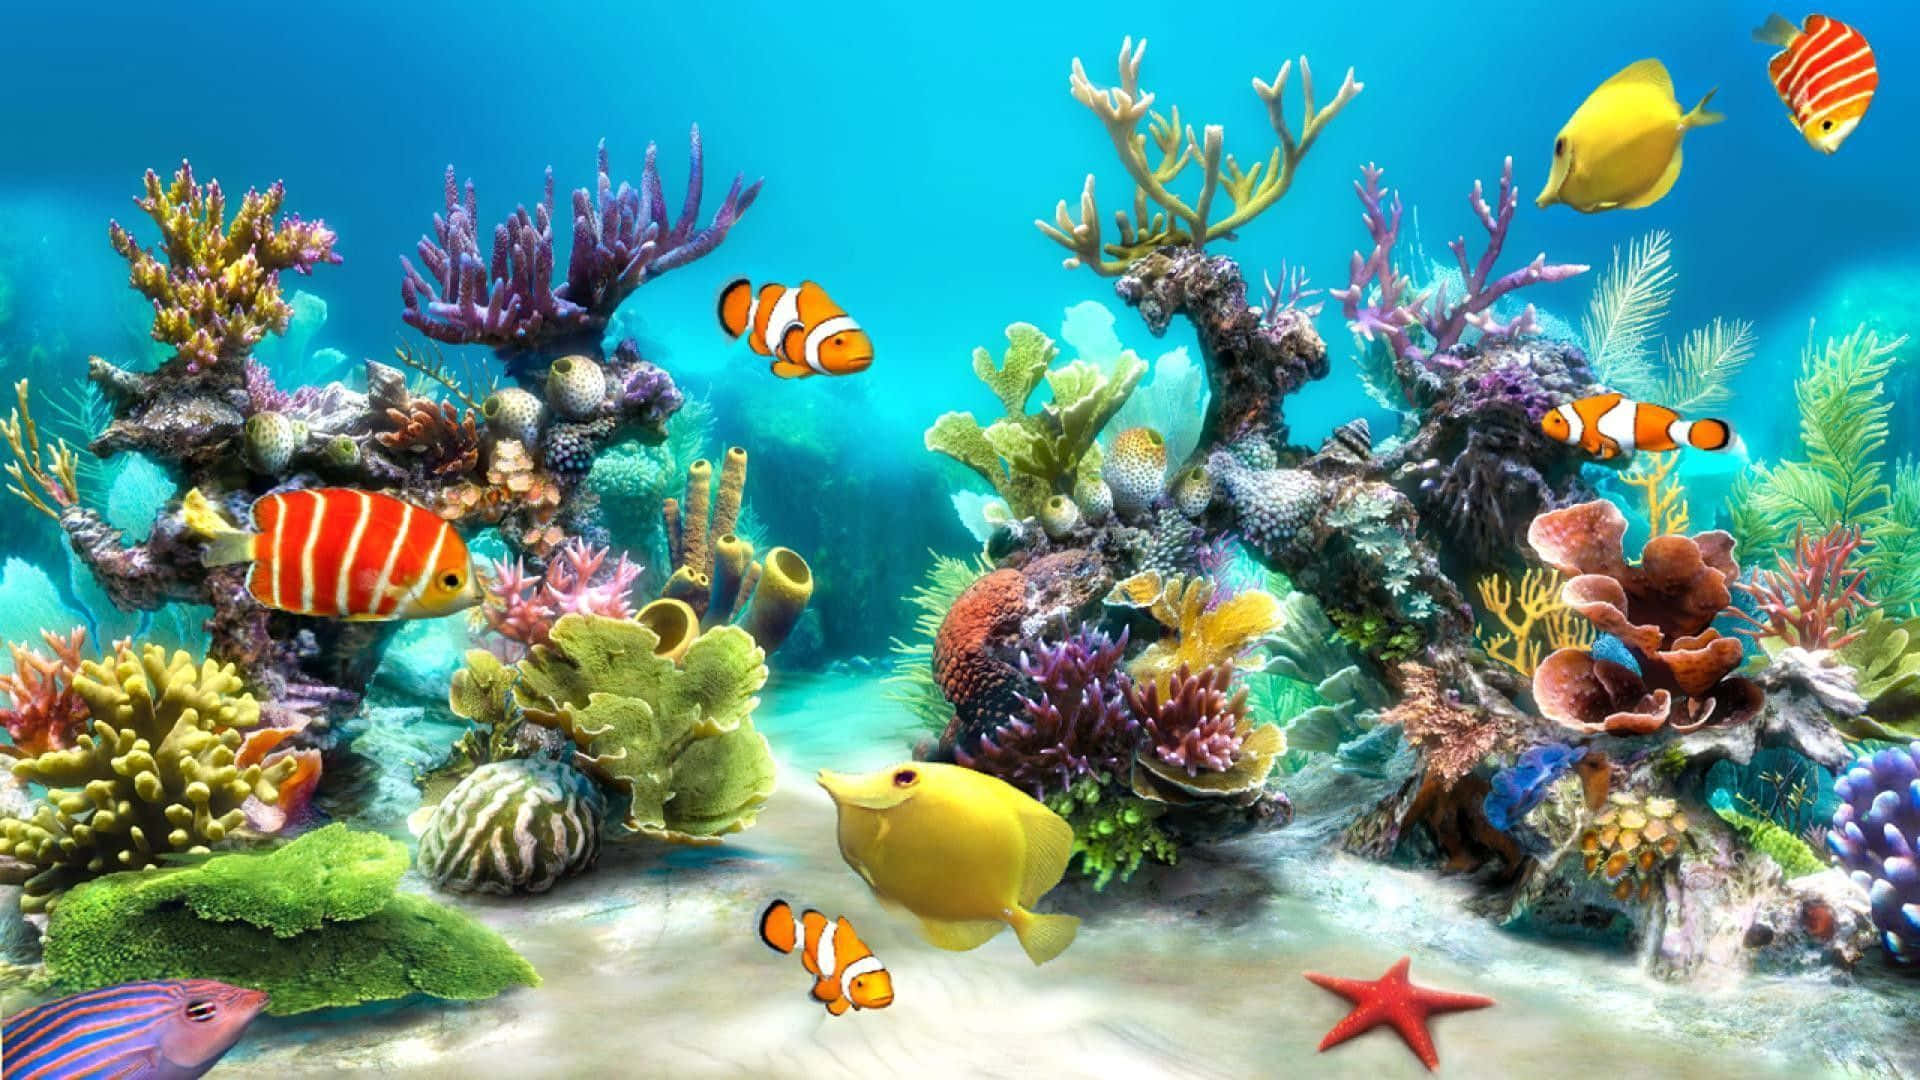 Enjoy the beauty of a realistic 3D Fish Tank